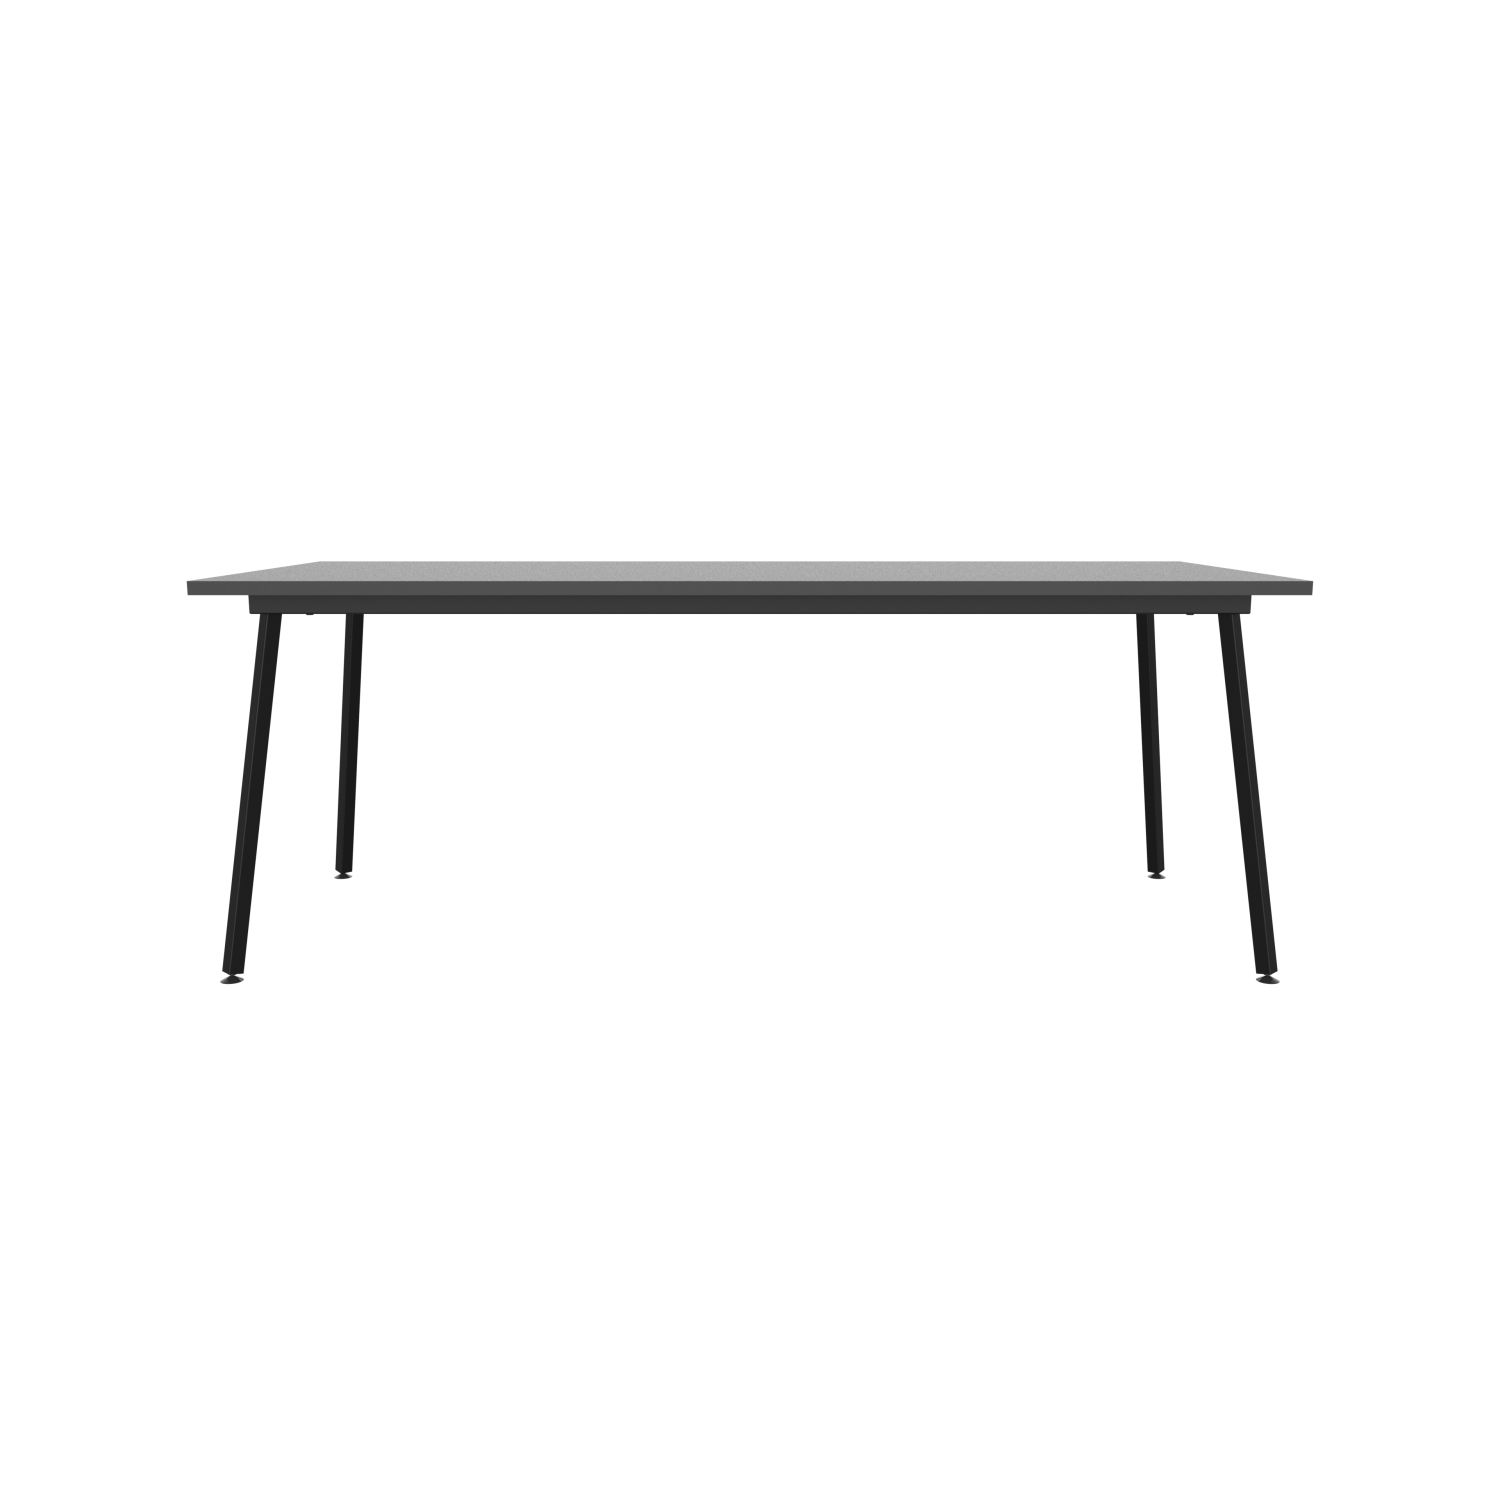 lensvelt maarten baas table fixed height 80x200 table top 26 mm top melamine black edge abs black black frame ral9005